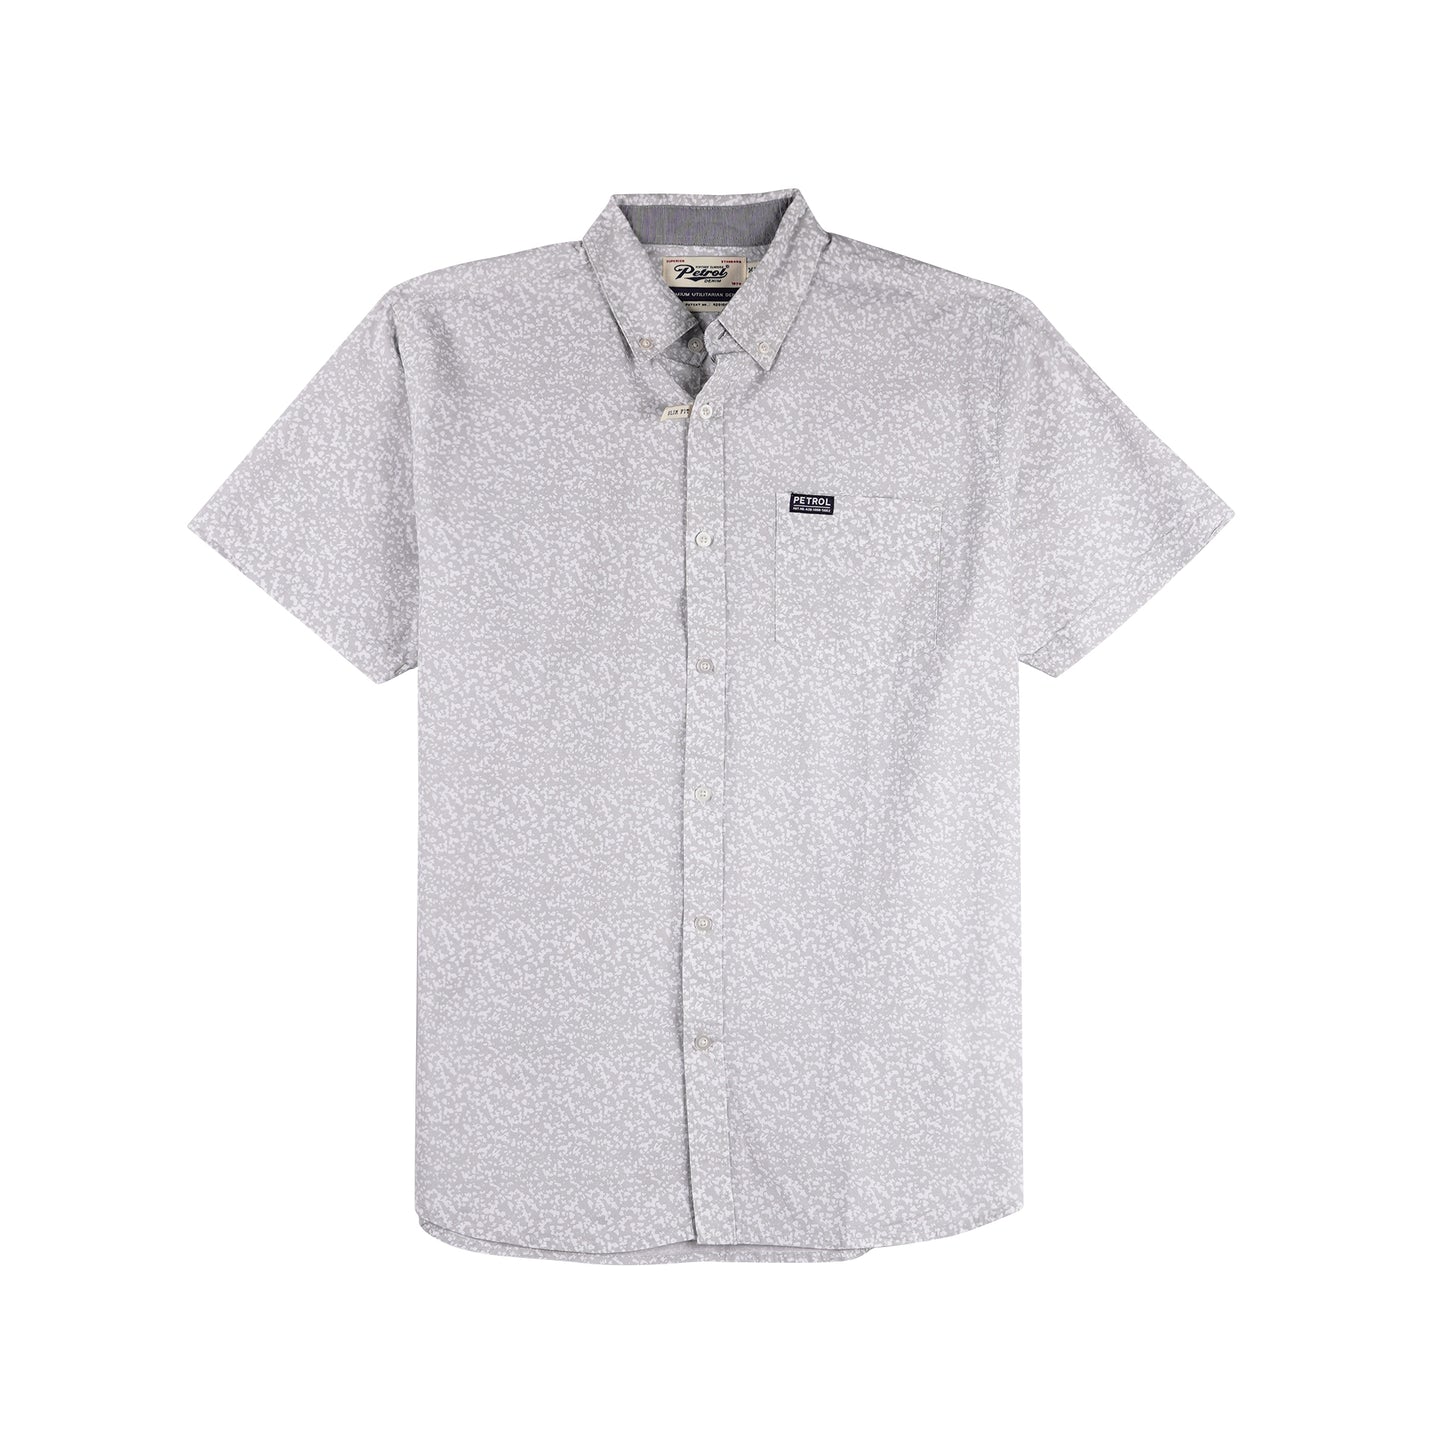 Petrol Basic Woven for Men Slim Fitting Shirt Trendy fashion Casual Top shirt for Men 154531 (Light Gray)